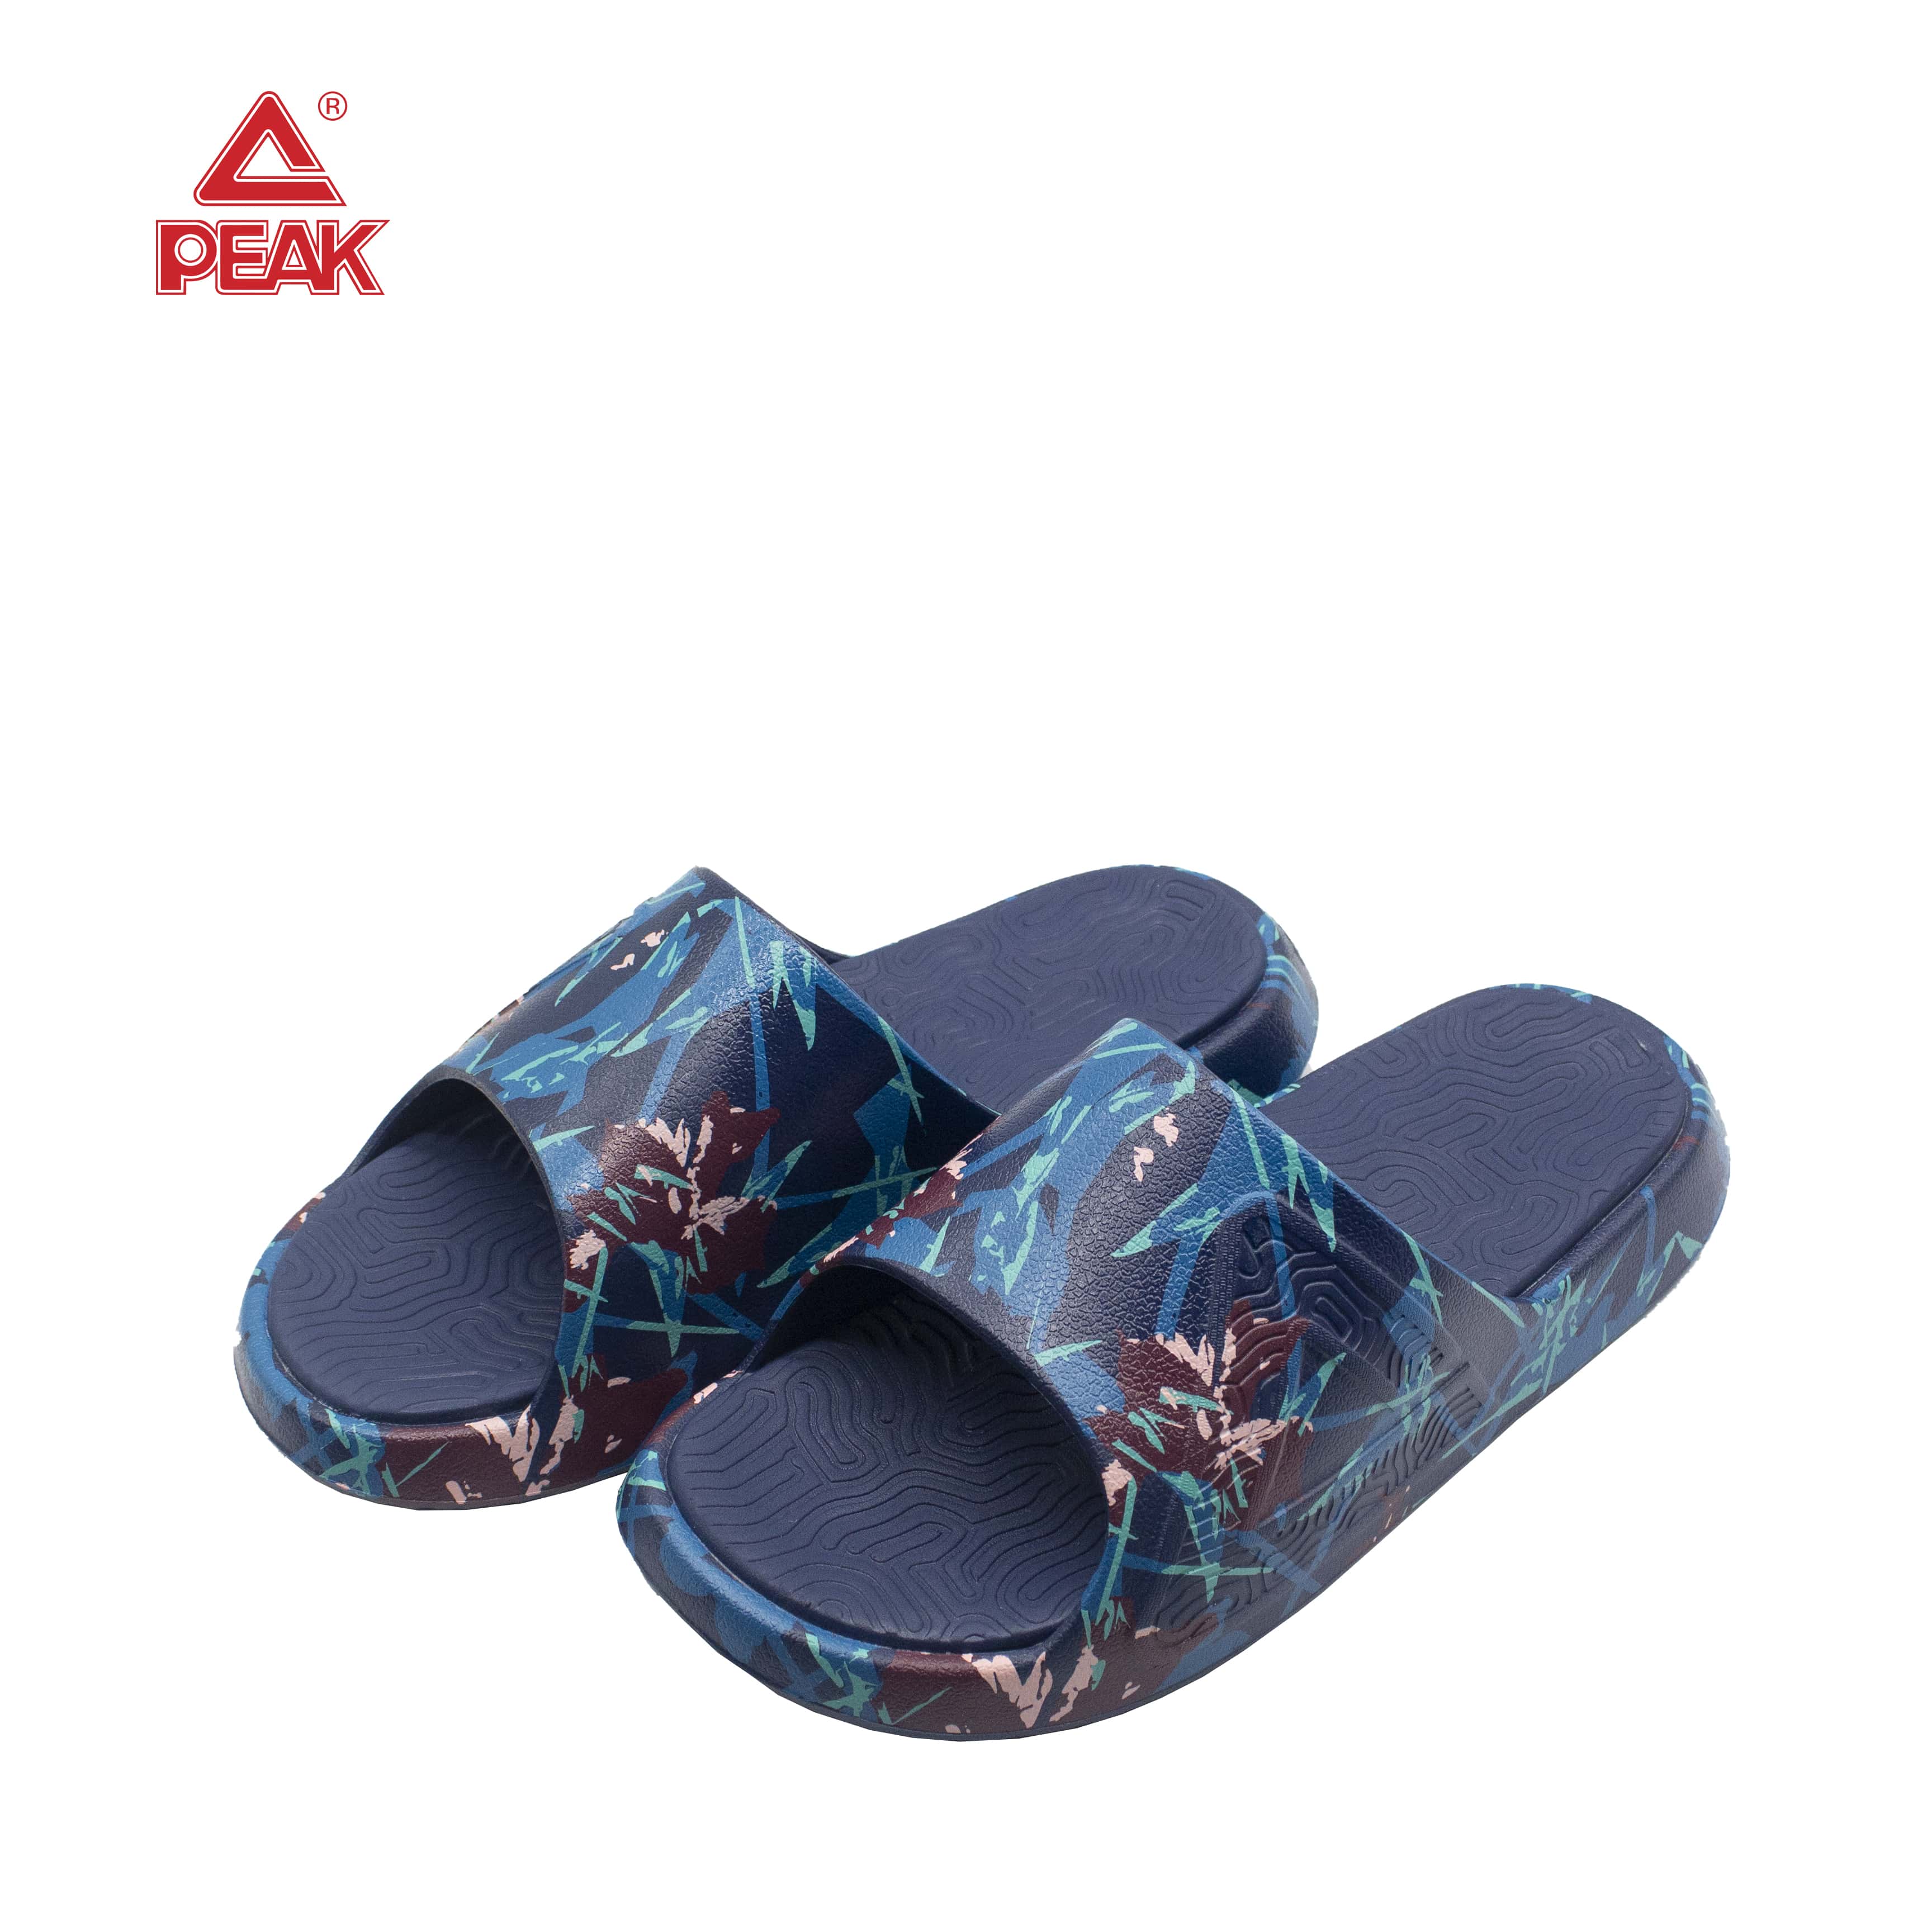 Buy PEAK Unisex Slippers (RL1607L) at Amazon.in